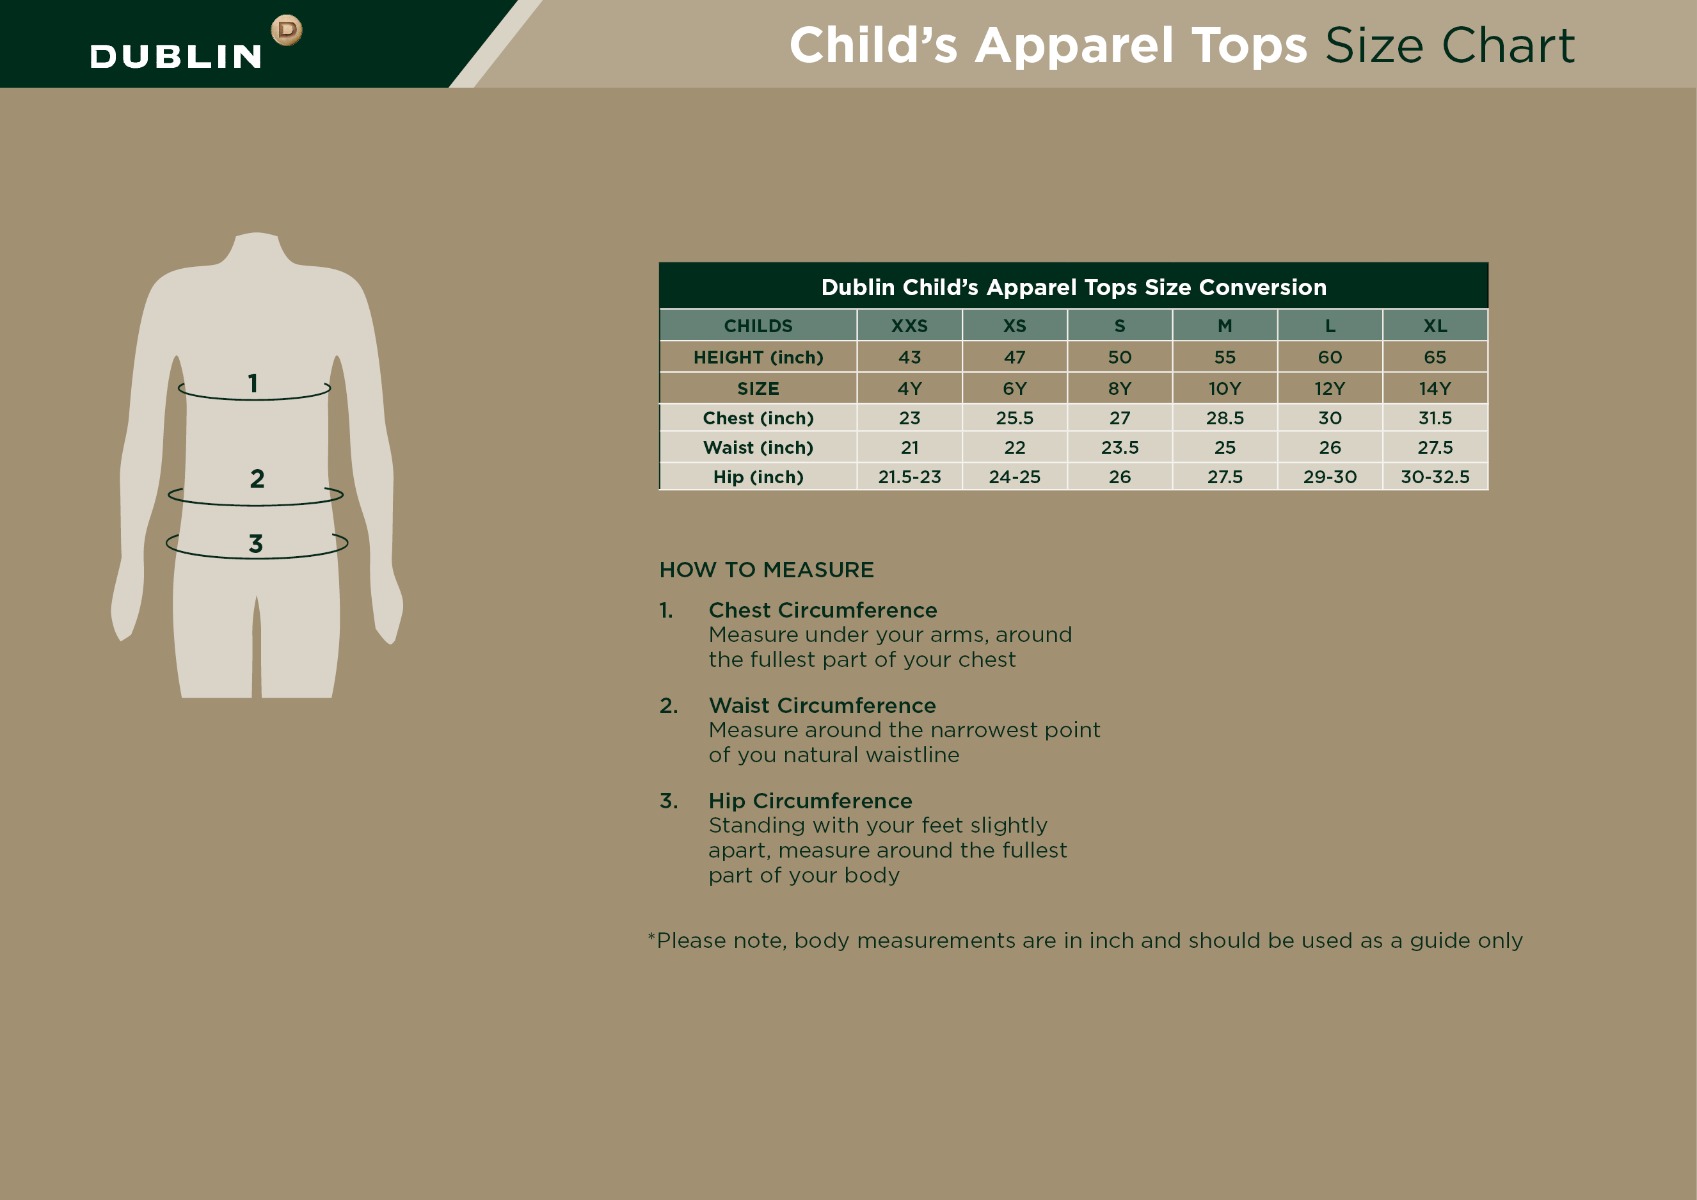 Children's Apparel Size Guide